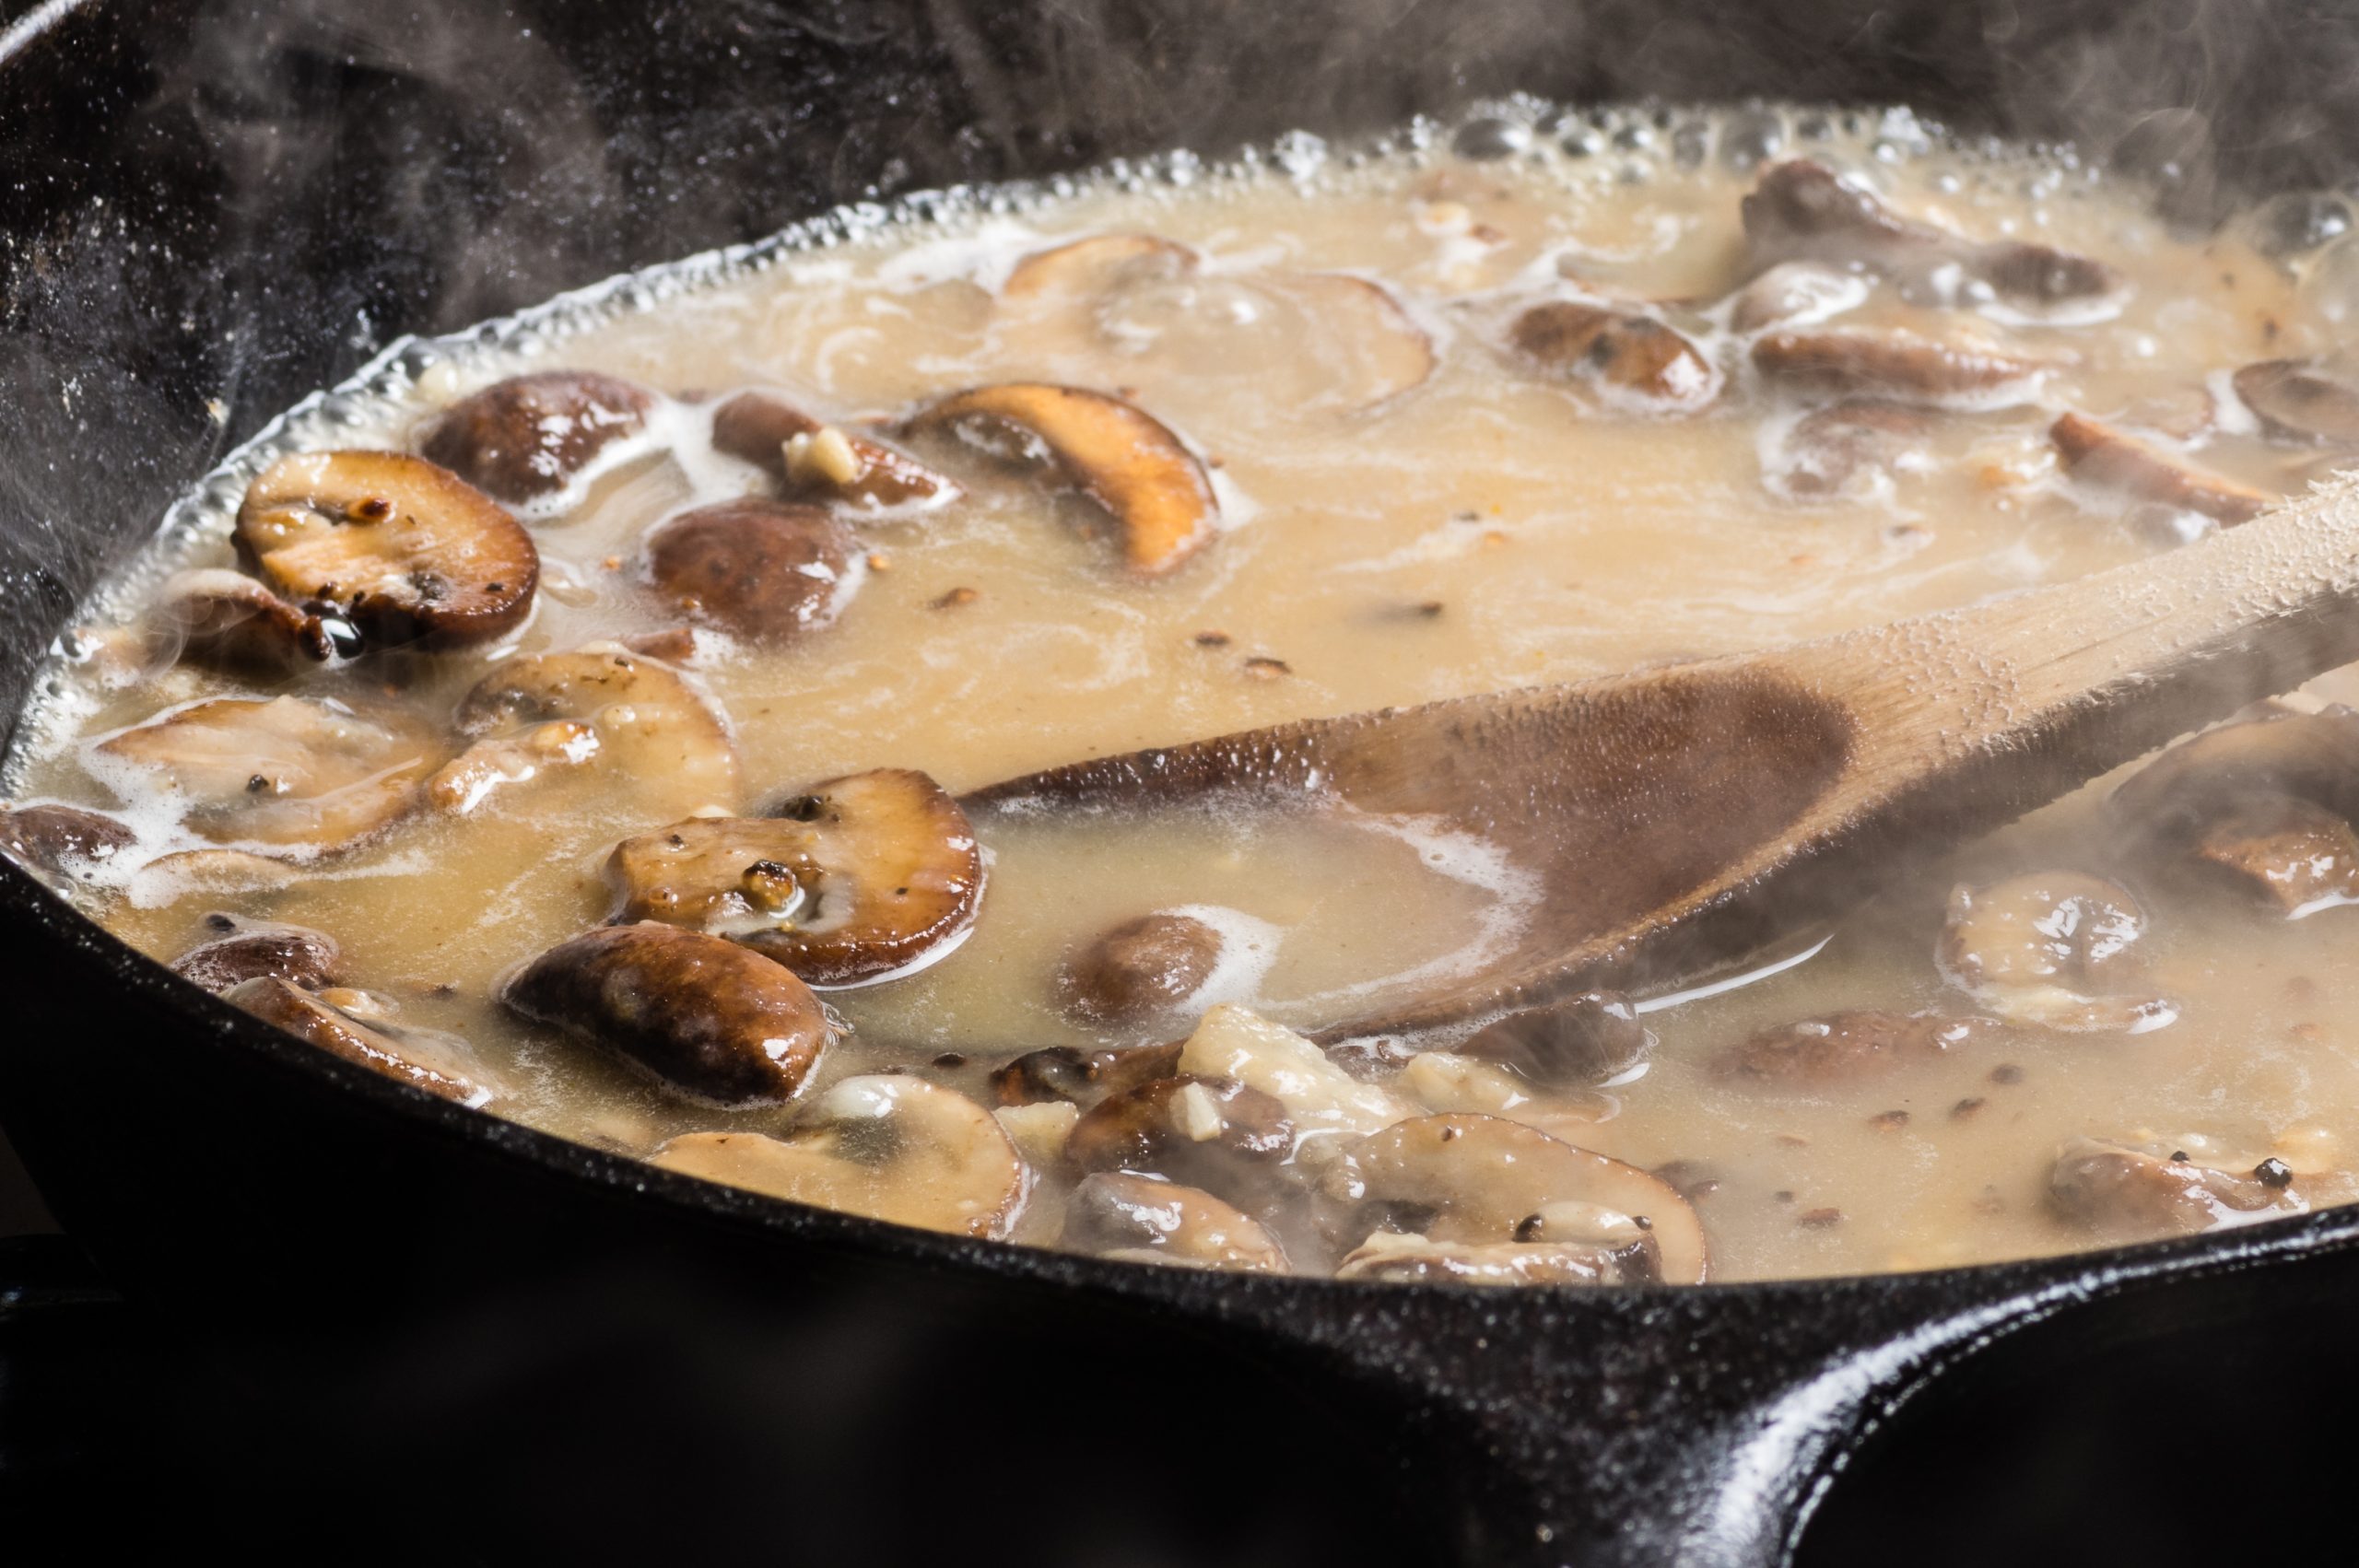 Saucy mushroom gravy